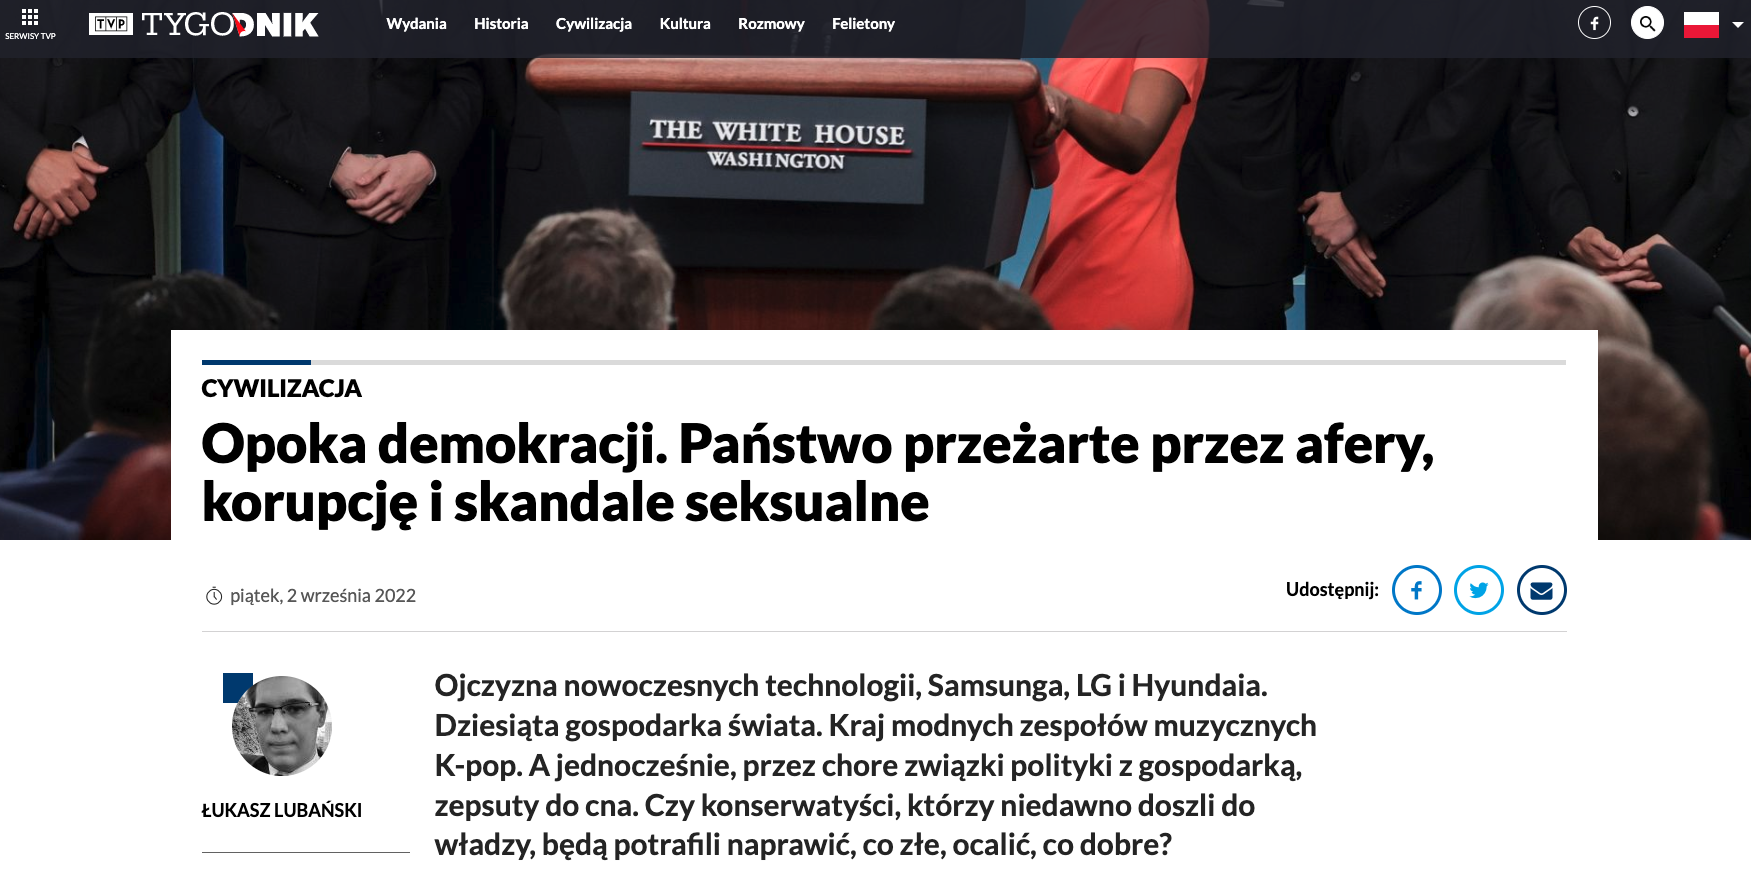 Zrzut ekranu strony internetowej portalu Tygodnik TVP/Screenshot of the Tygodnik TVP website